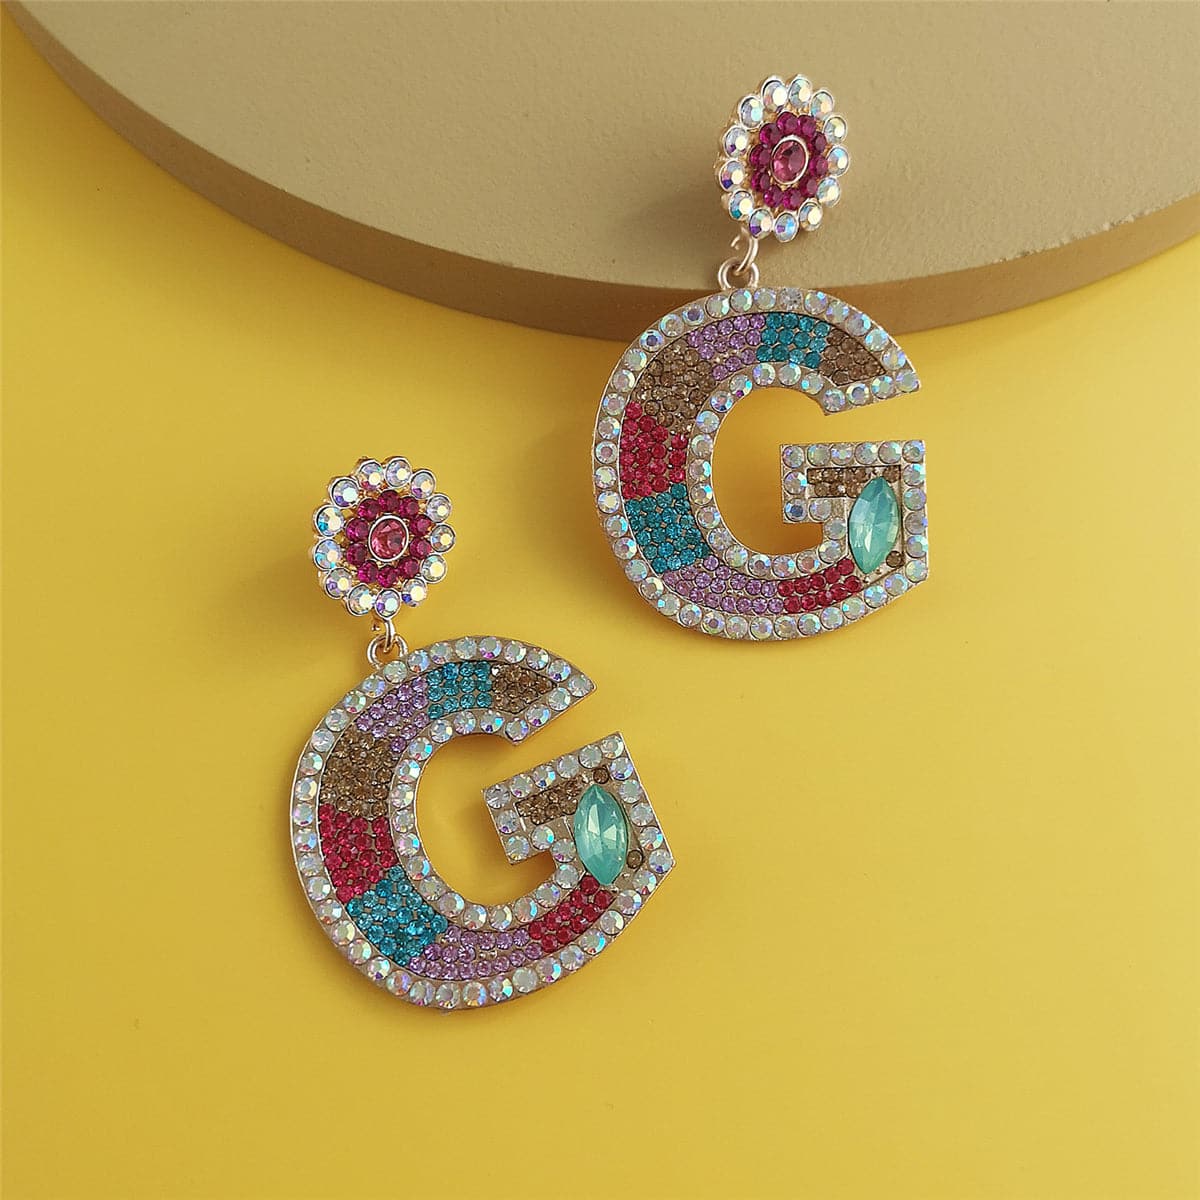 Blue & Pink Crystal & Cubic Zirconia 'G' Drop Earrings